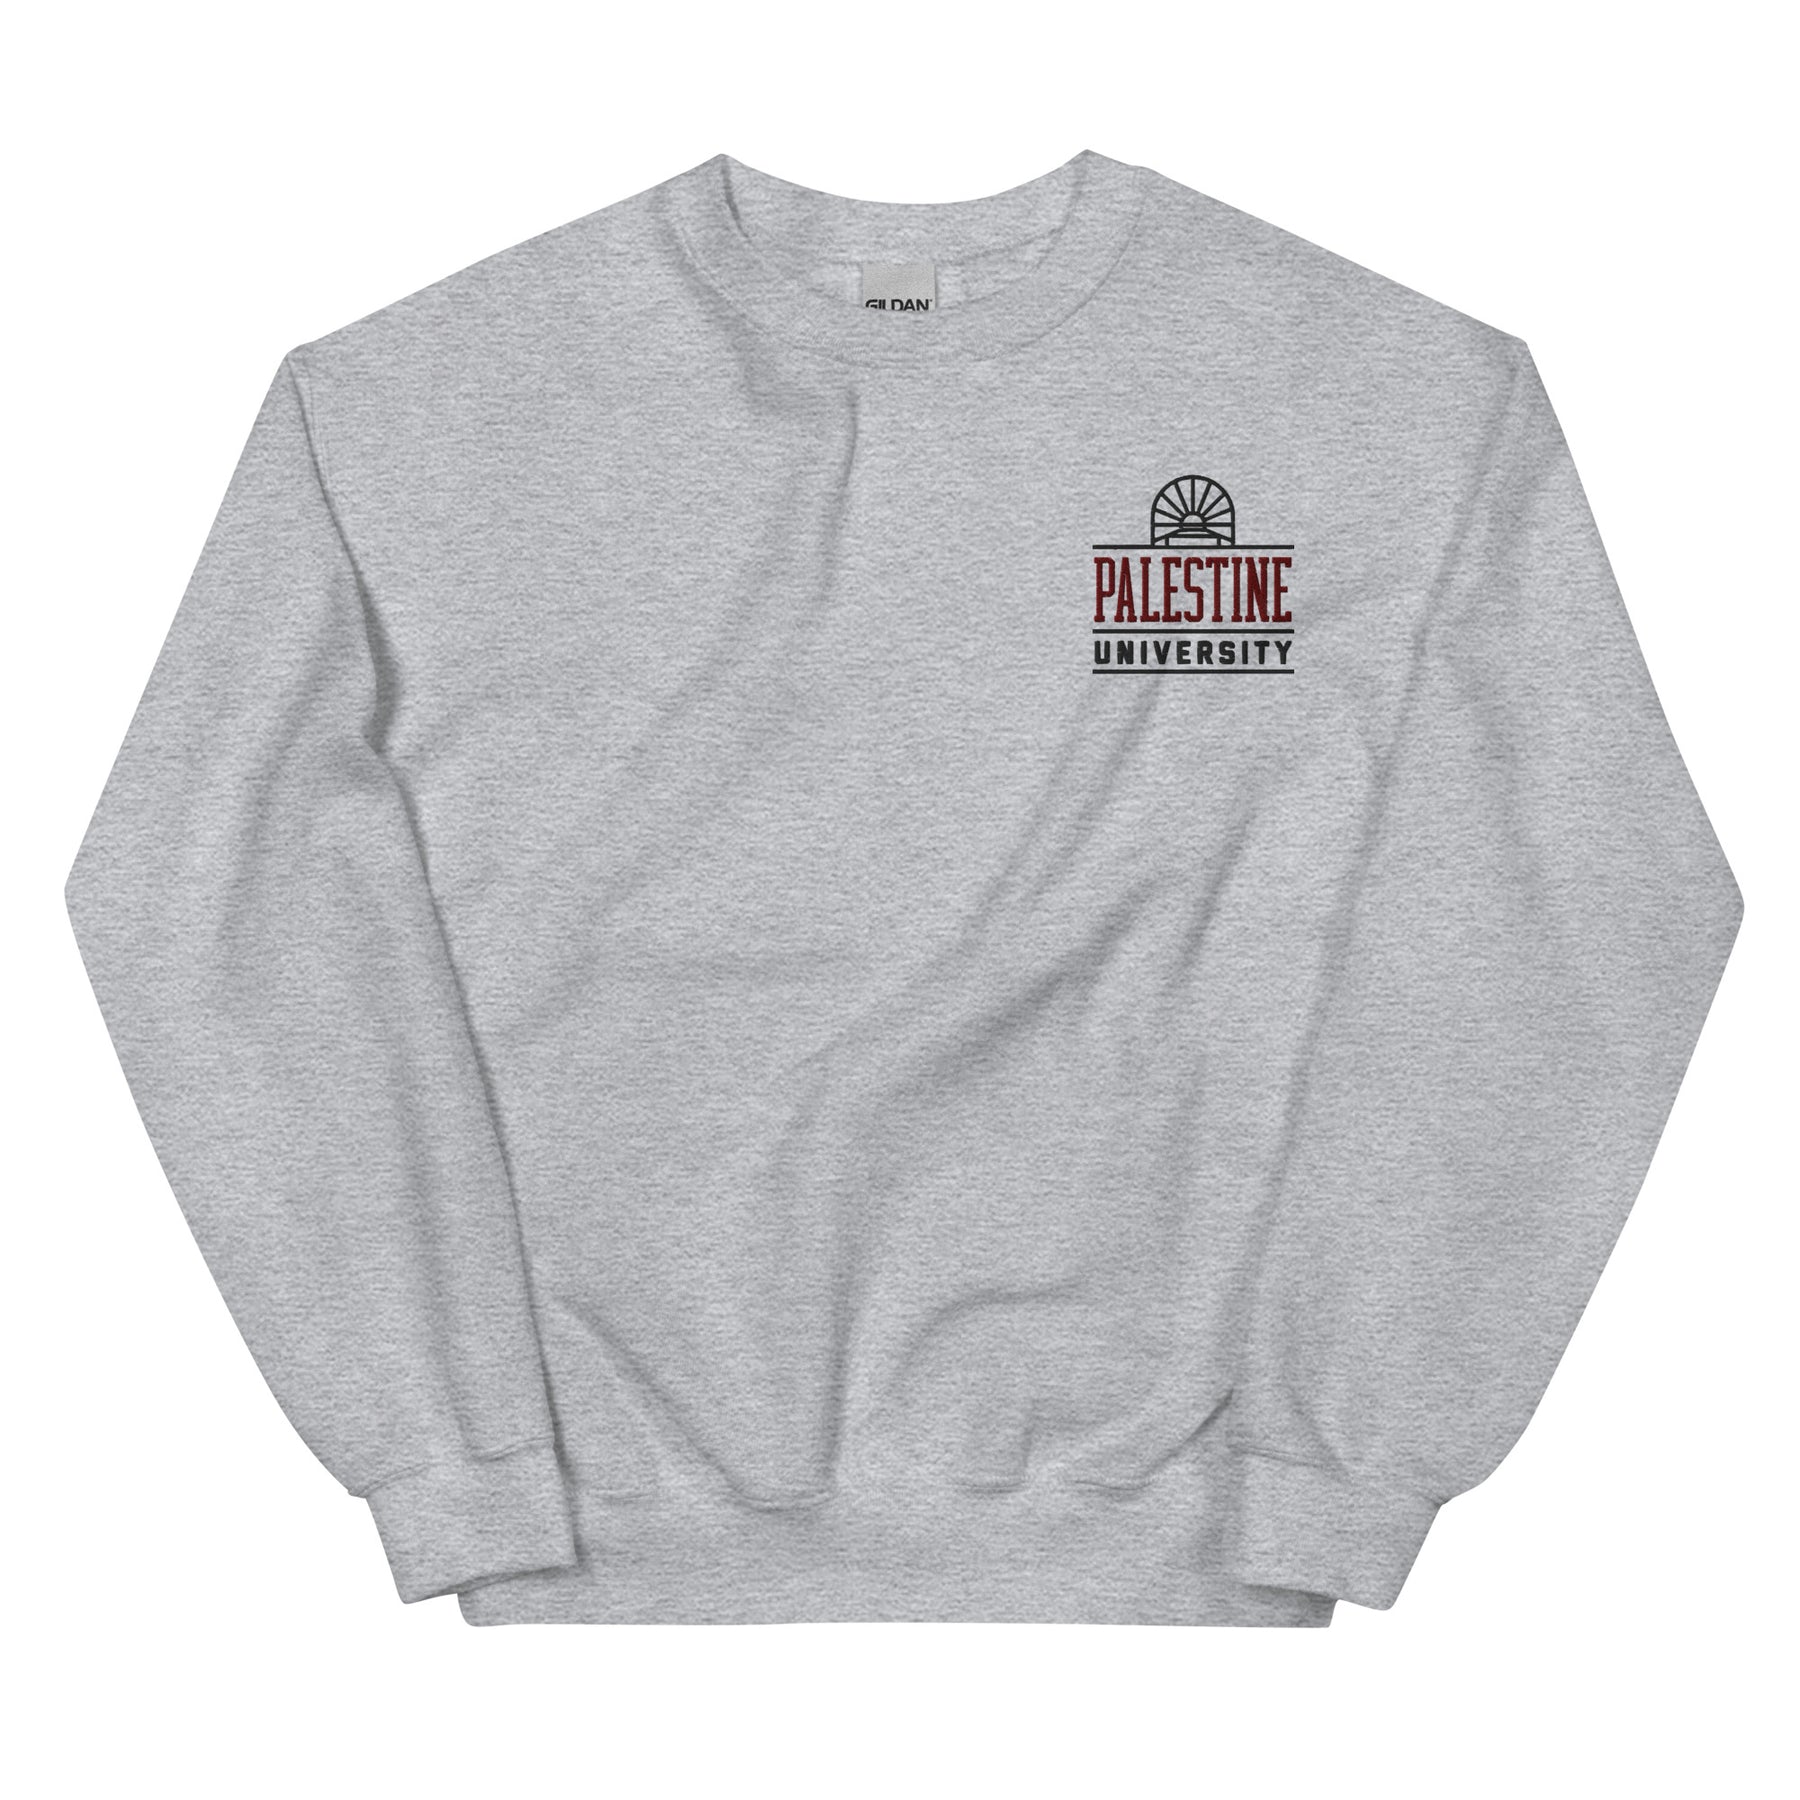 Palestine University classic sweatshirt in grey by Dar Collective